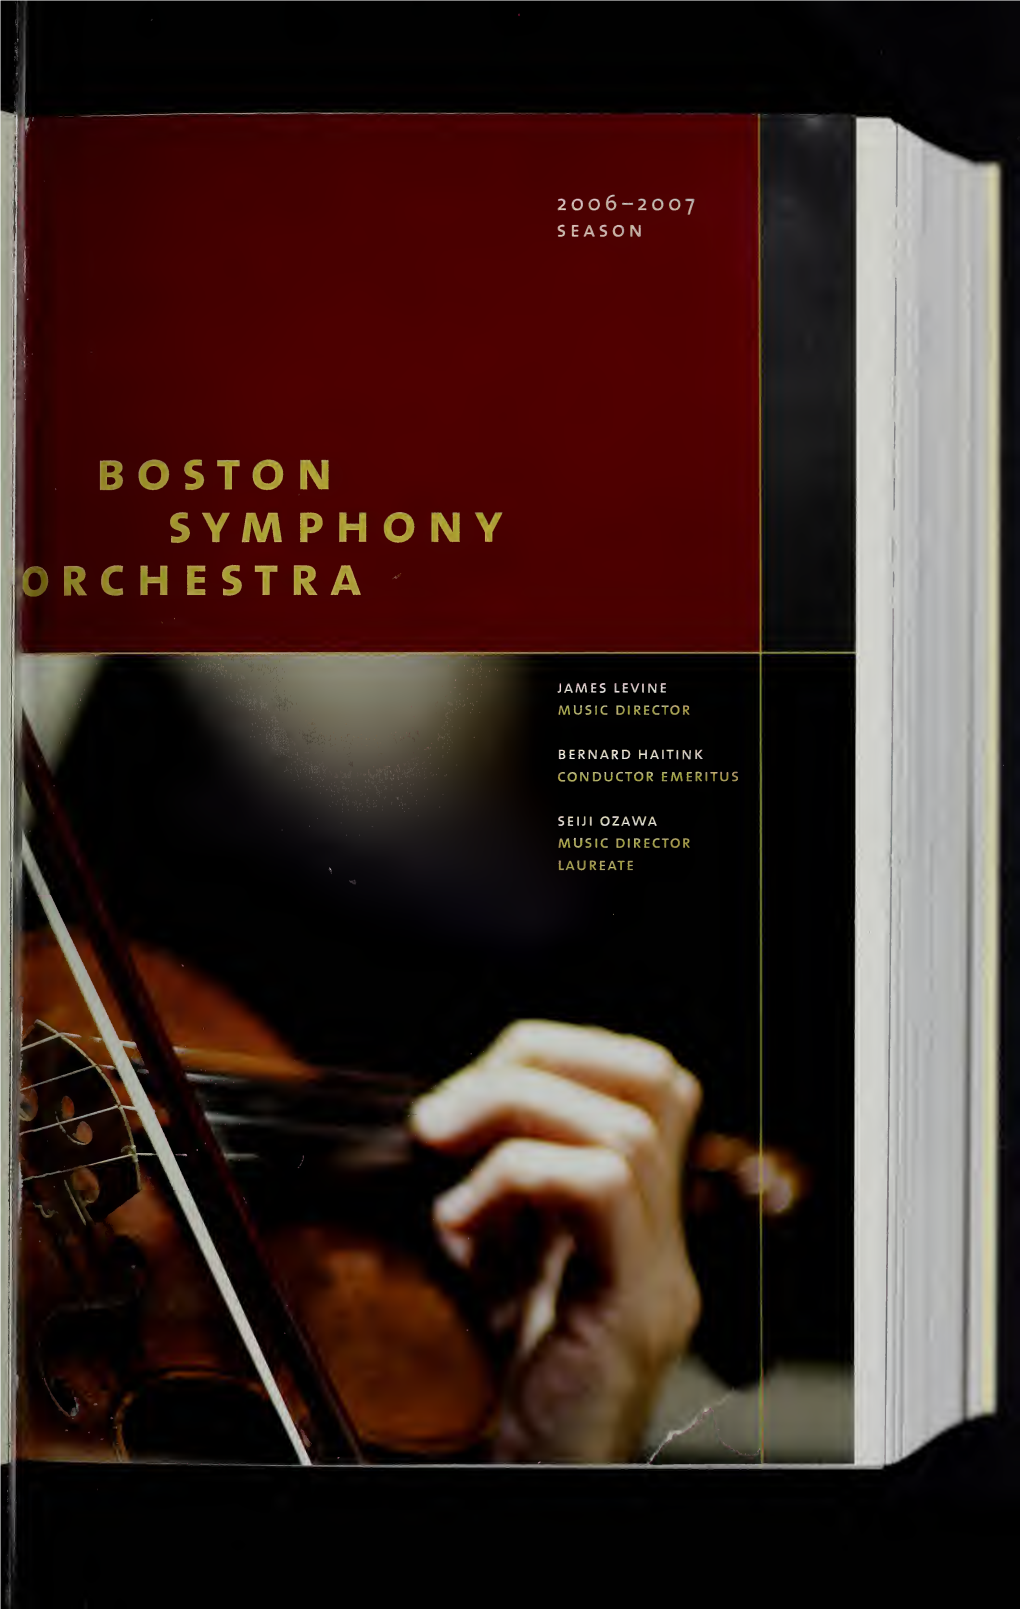 Boston Symphony Orchestra Concert Programs, Season 126, 2006-2007